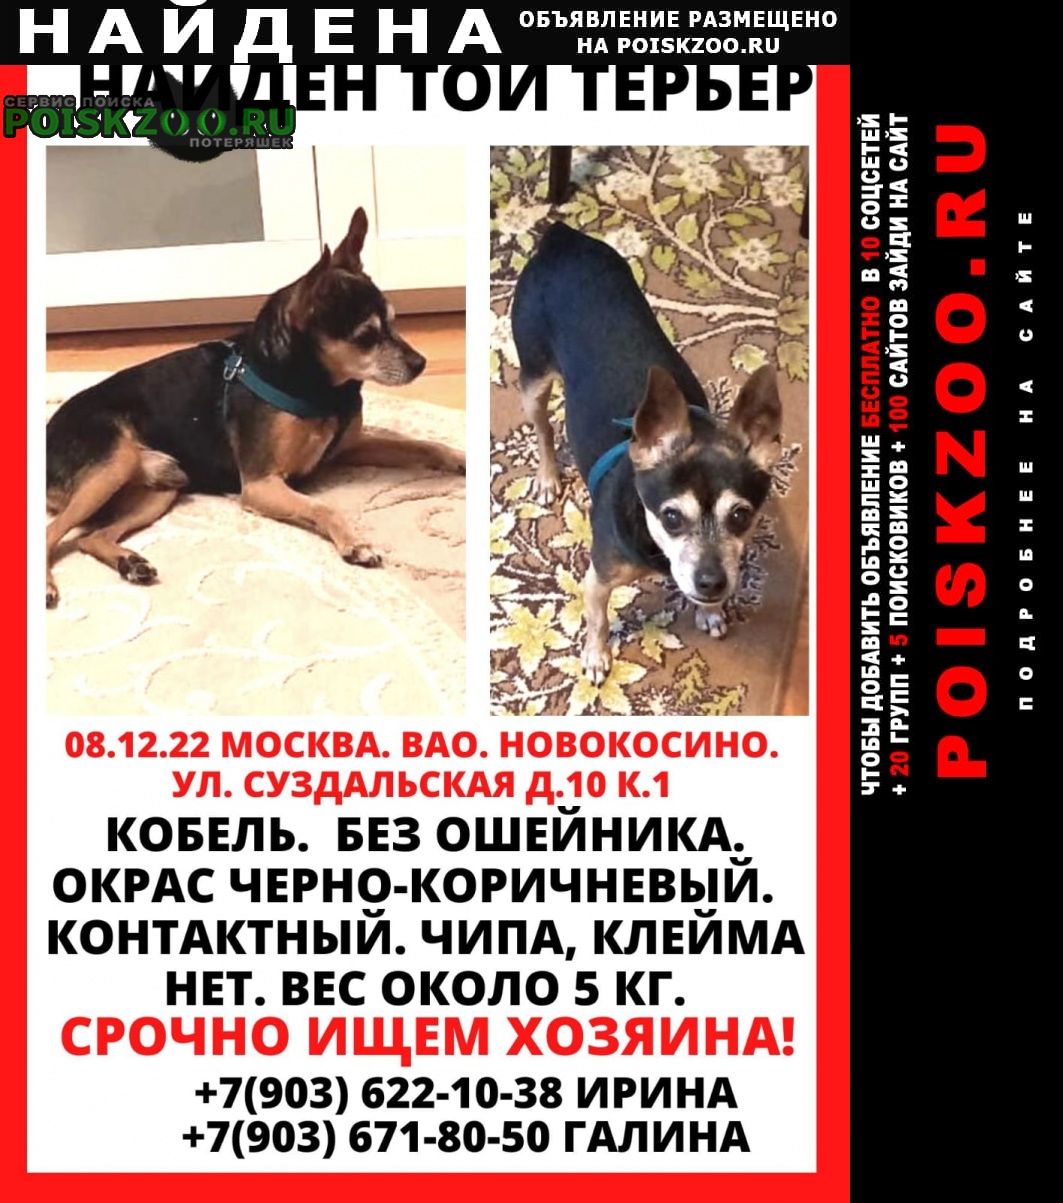 Найдена собака кобель той терьер Москва